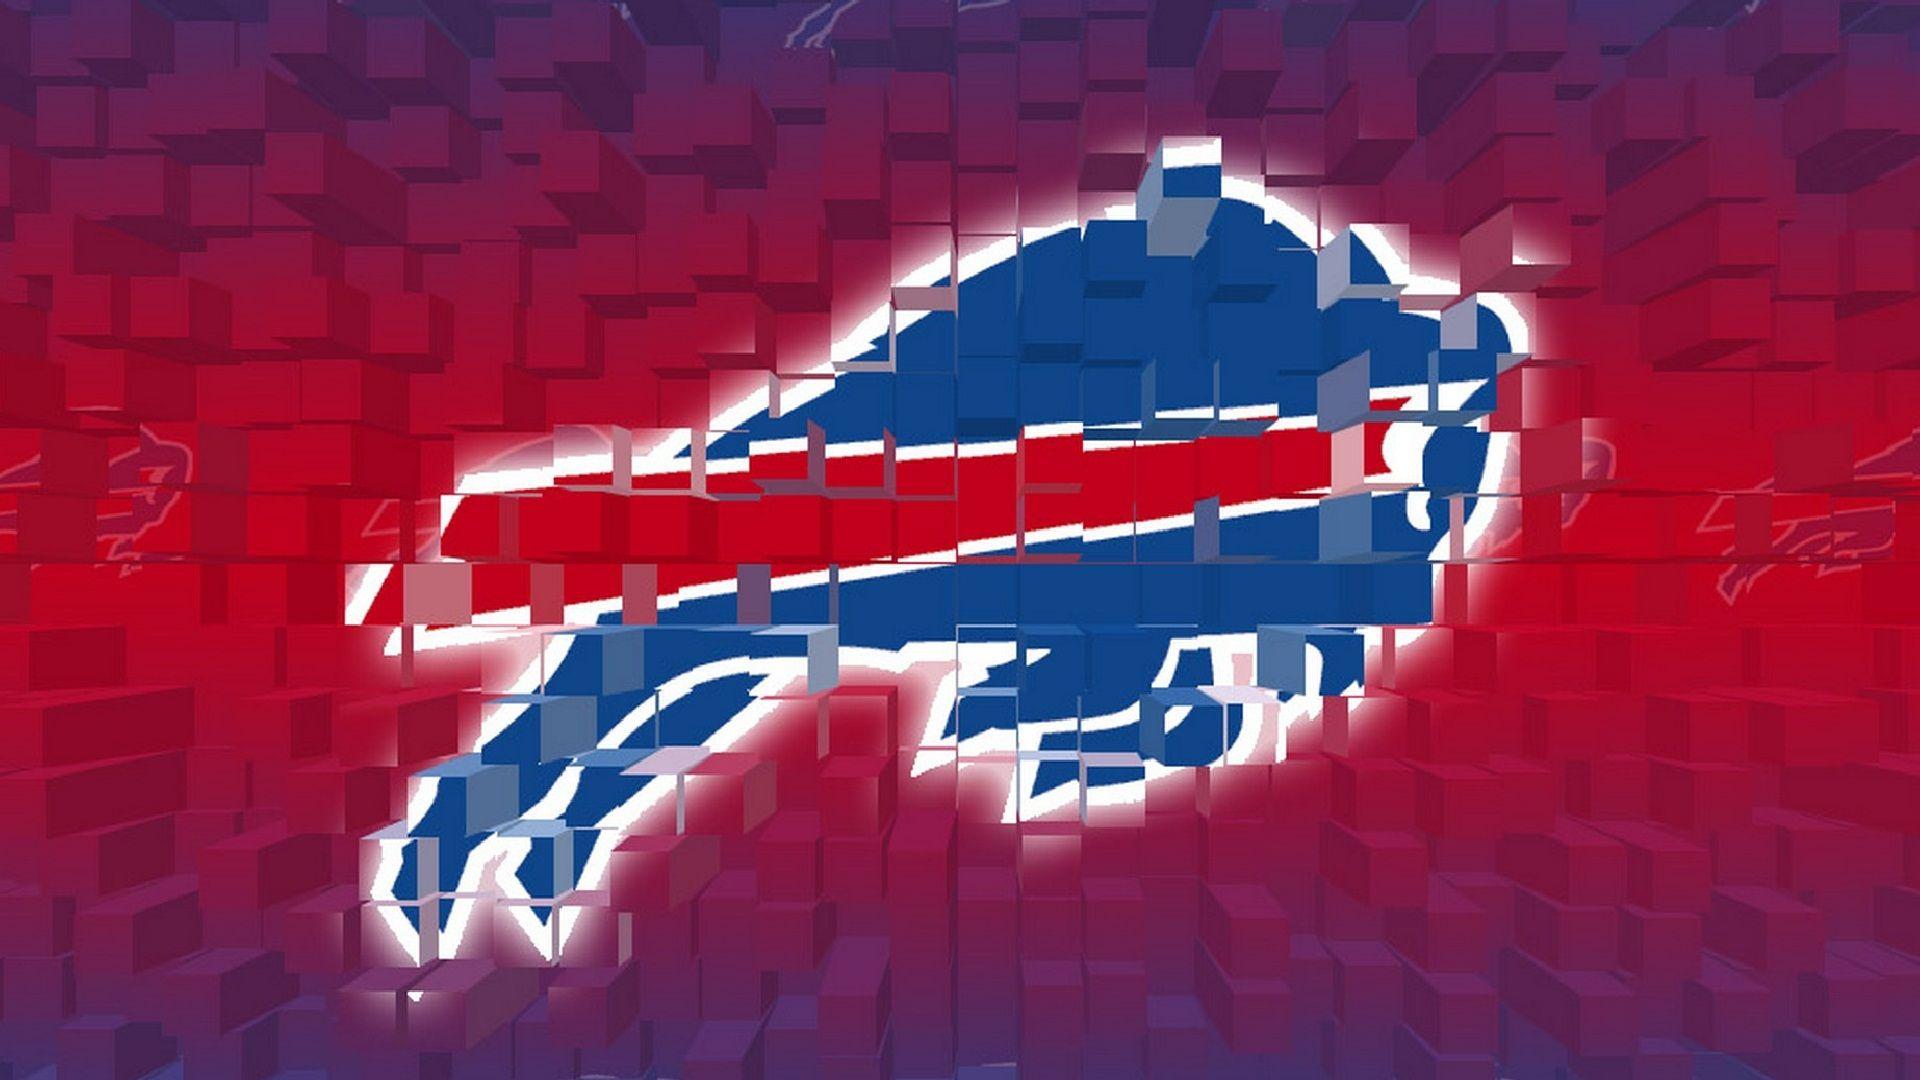 HD Buffalo Bills Background. Buffalo bills, Football